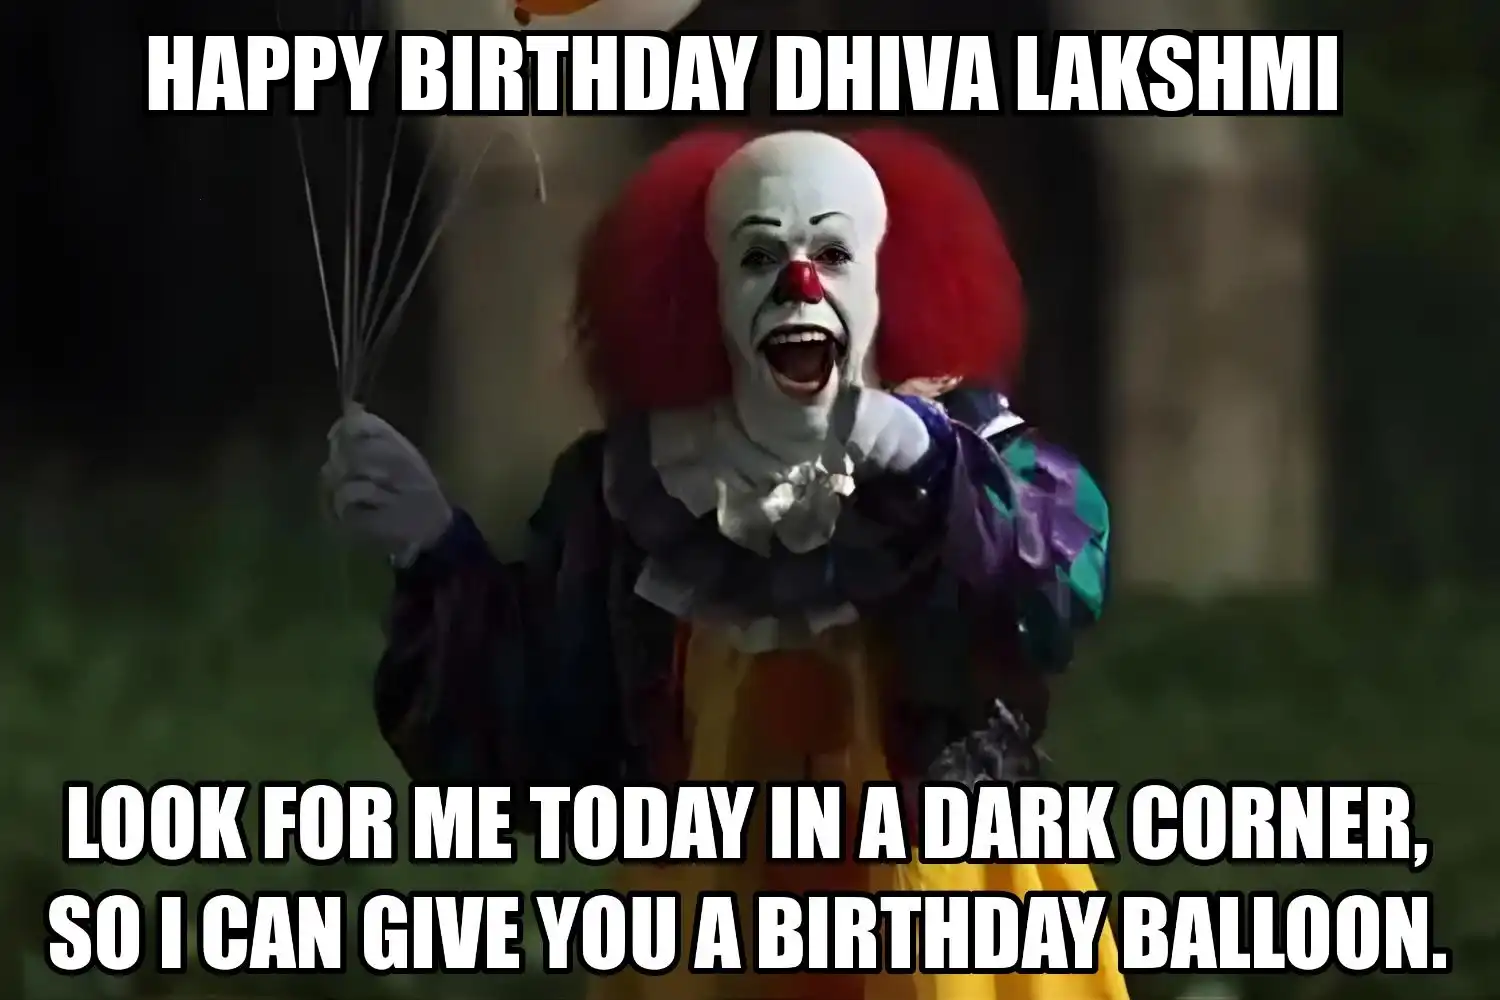 Happy Birthday Dhiva lakshmi I Can Give You A Balloon Meme